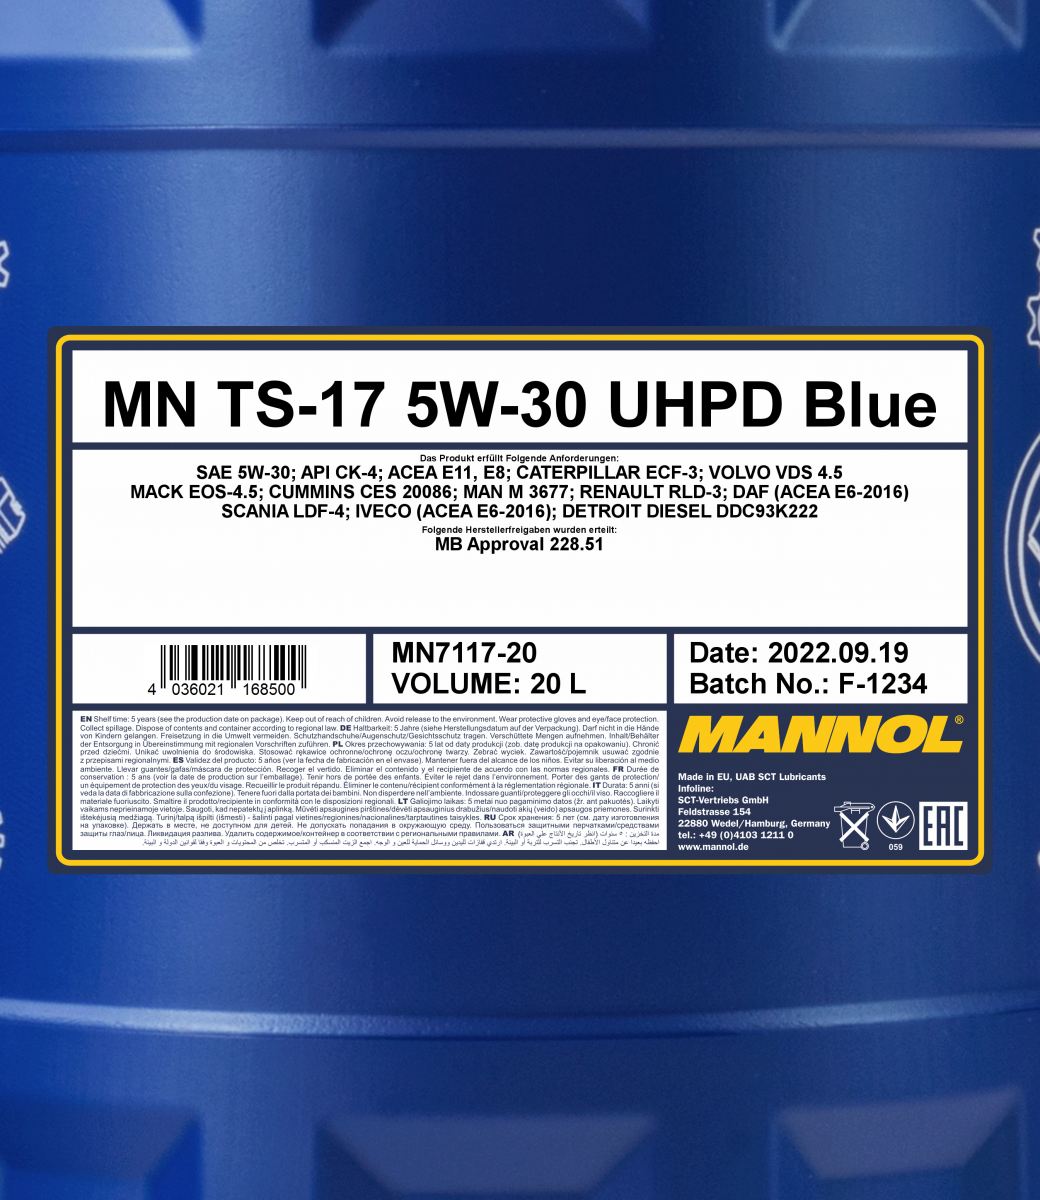 MANNOL 20 Liter TS-17 UHPD Blue 5W-30 Leichtlauf-Motoröl ACEA E6/E7